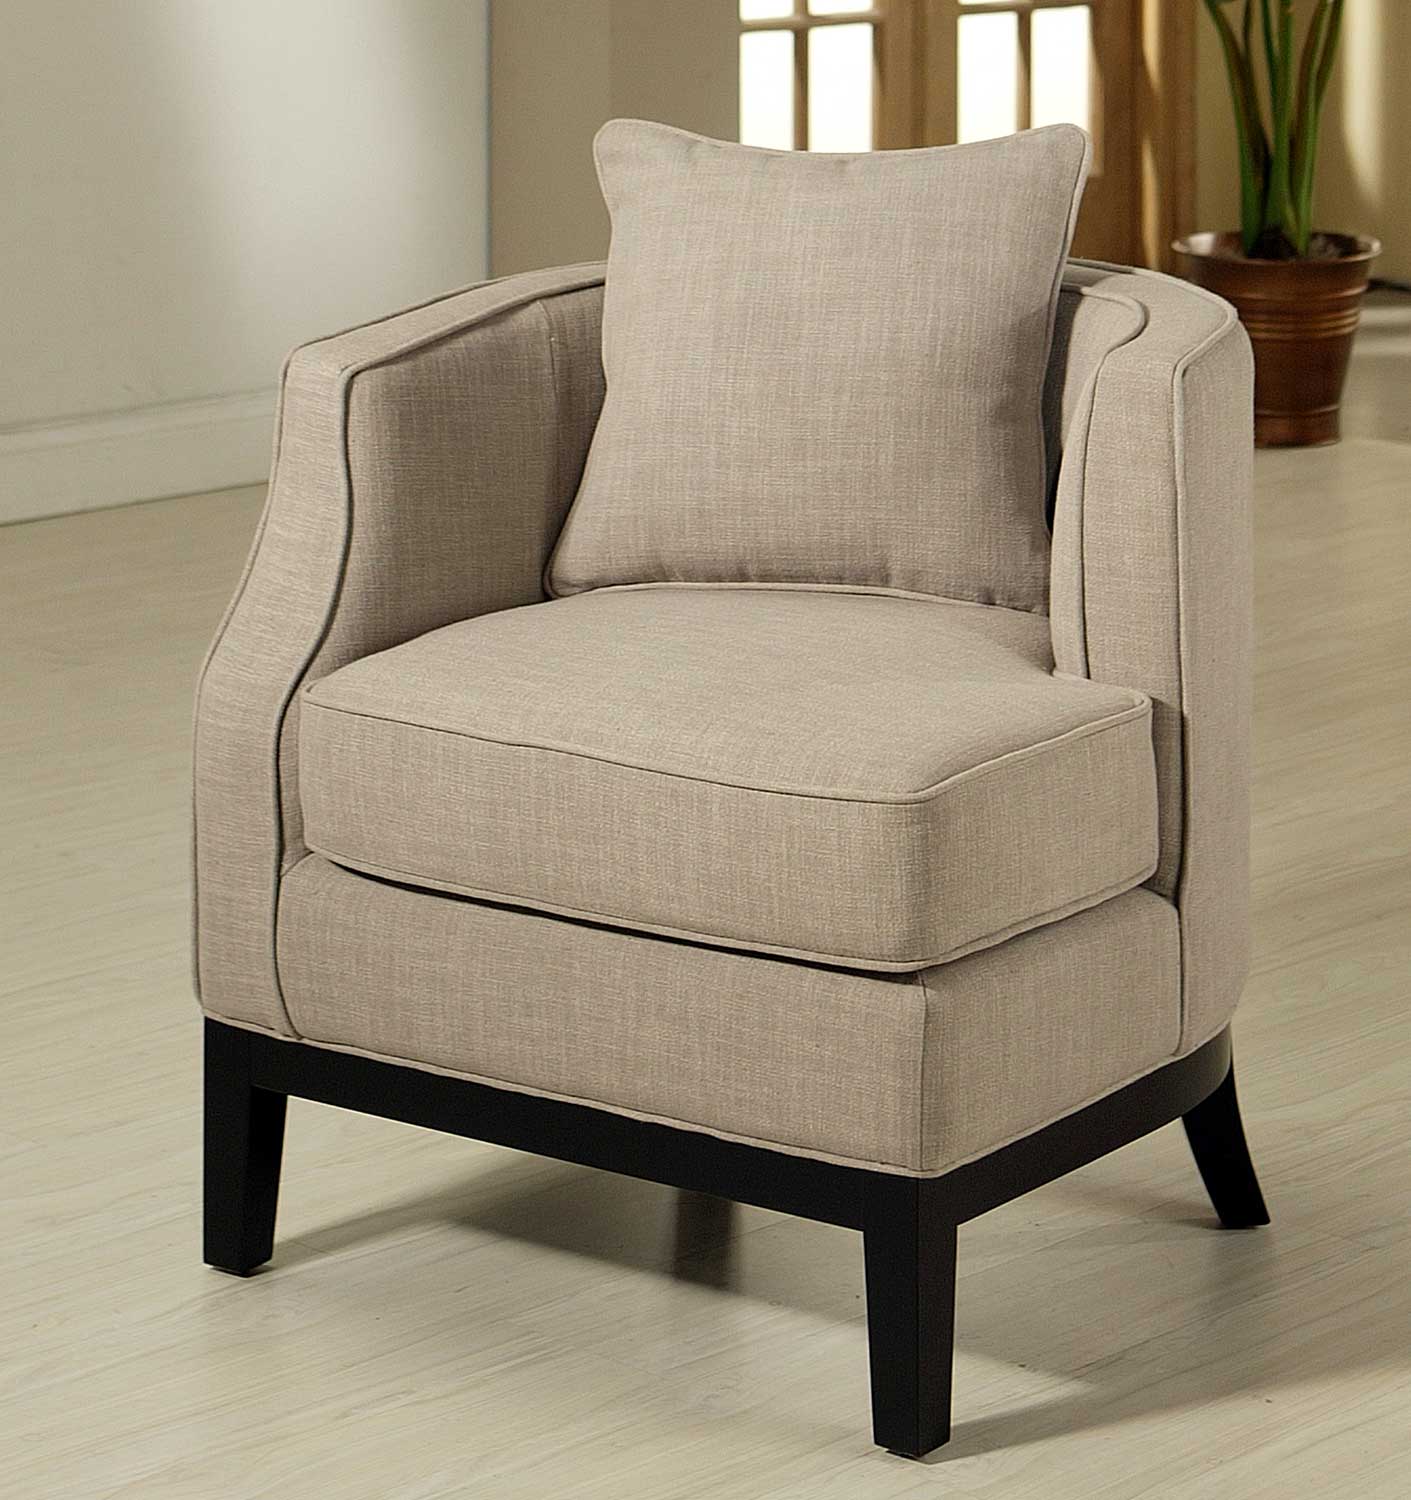 Abbyson Living Eve Beige Fabric Corner Chair